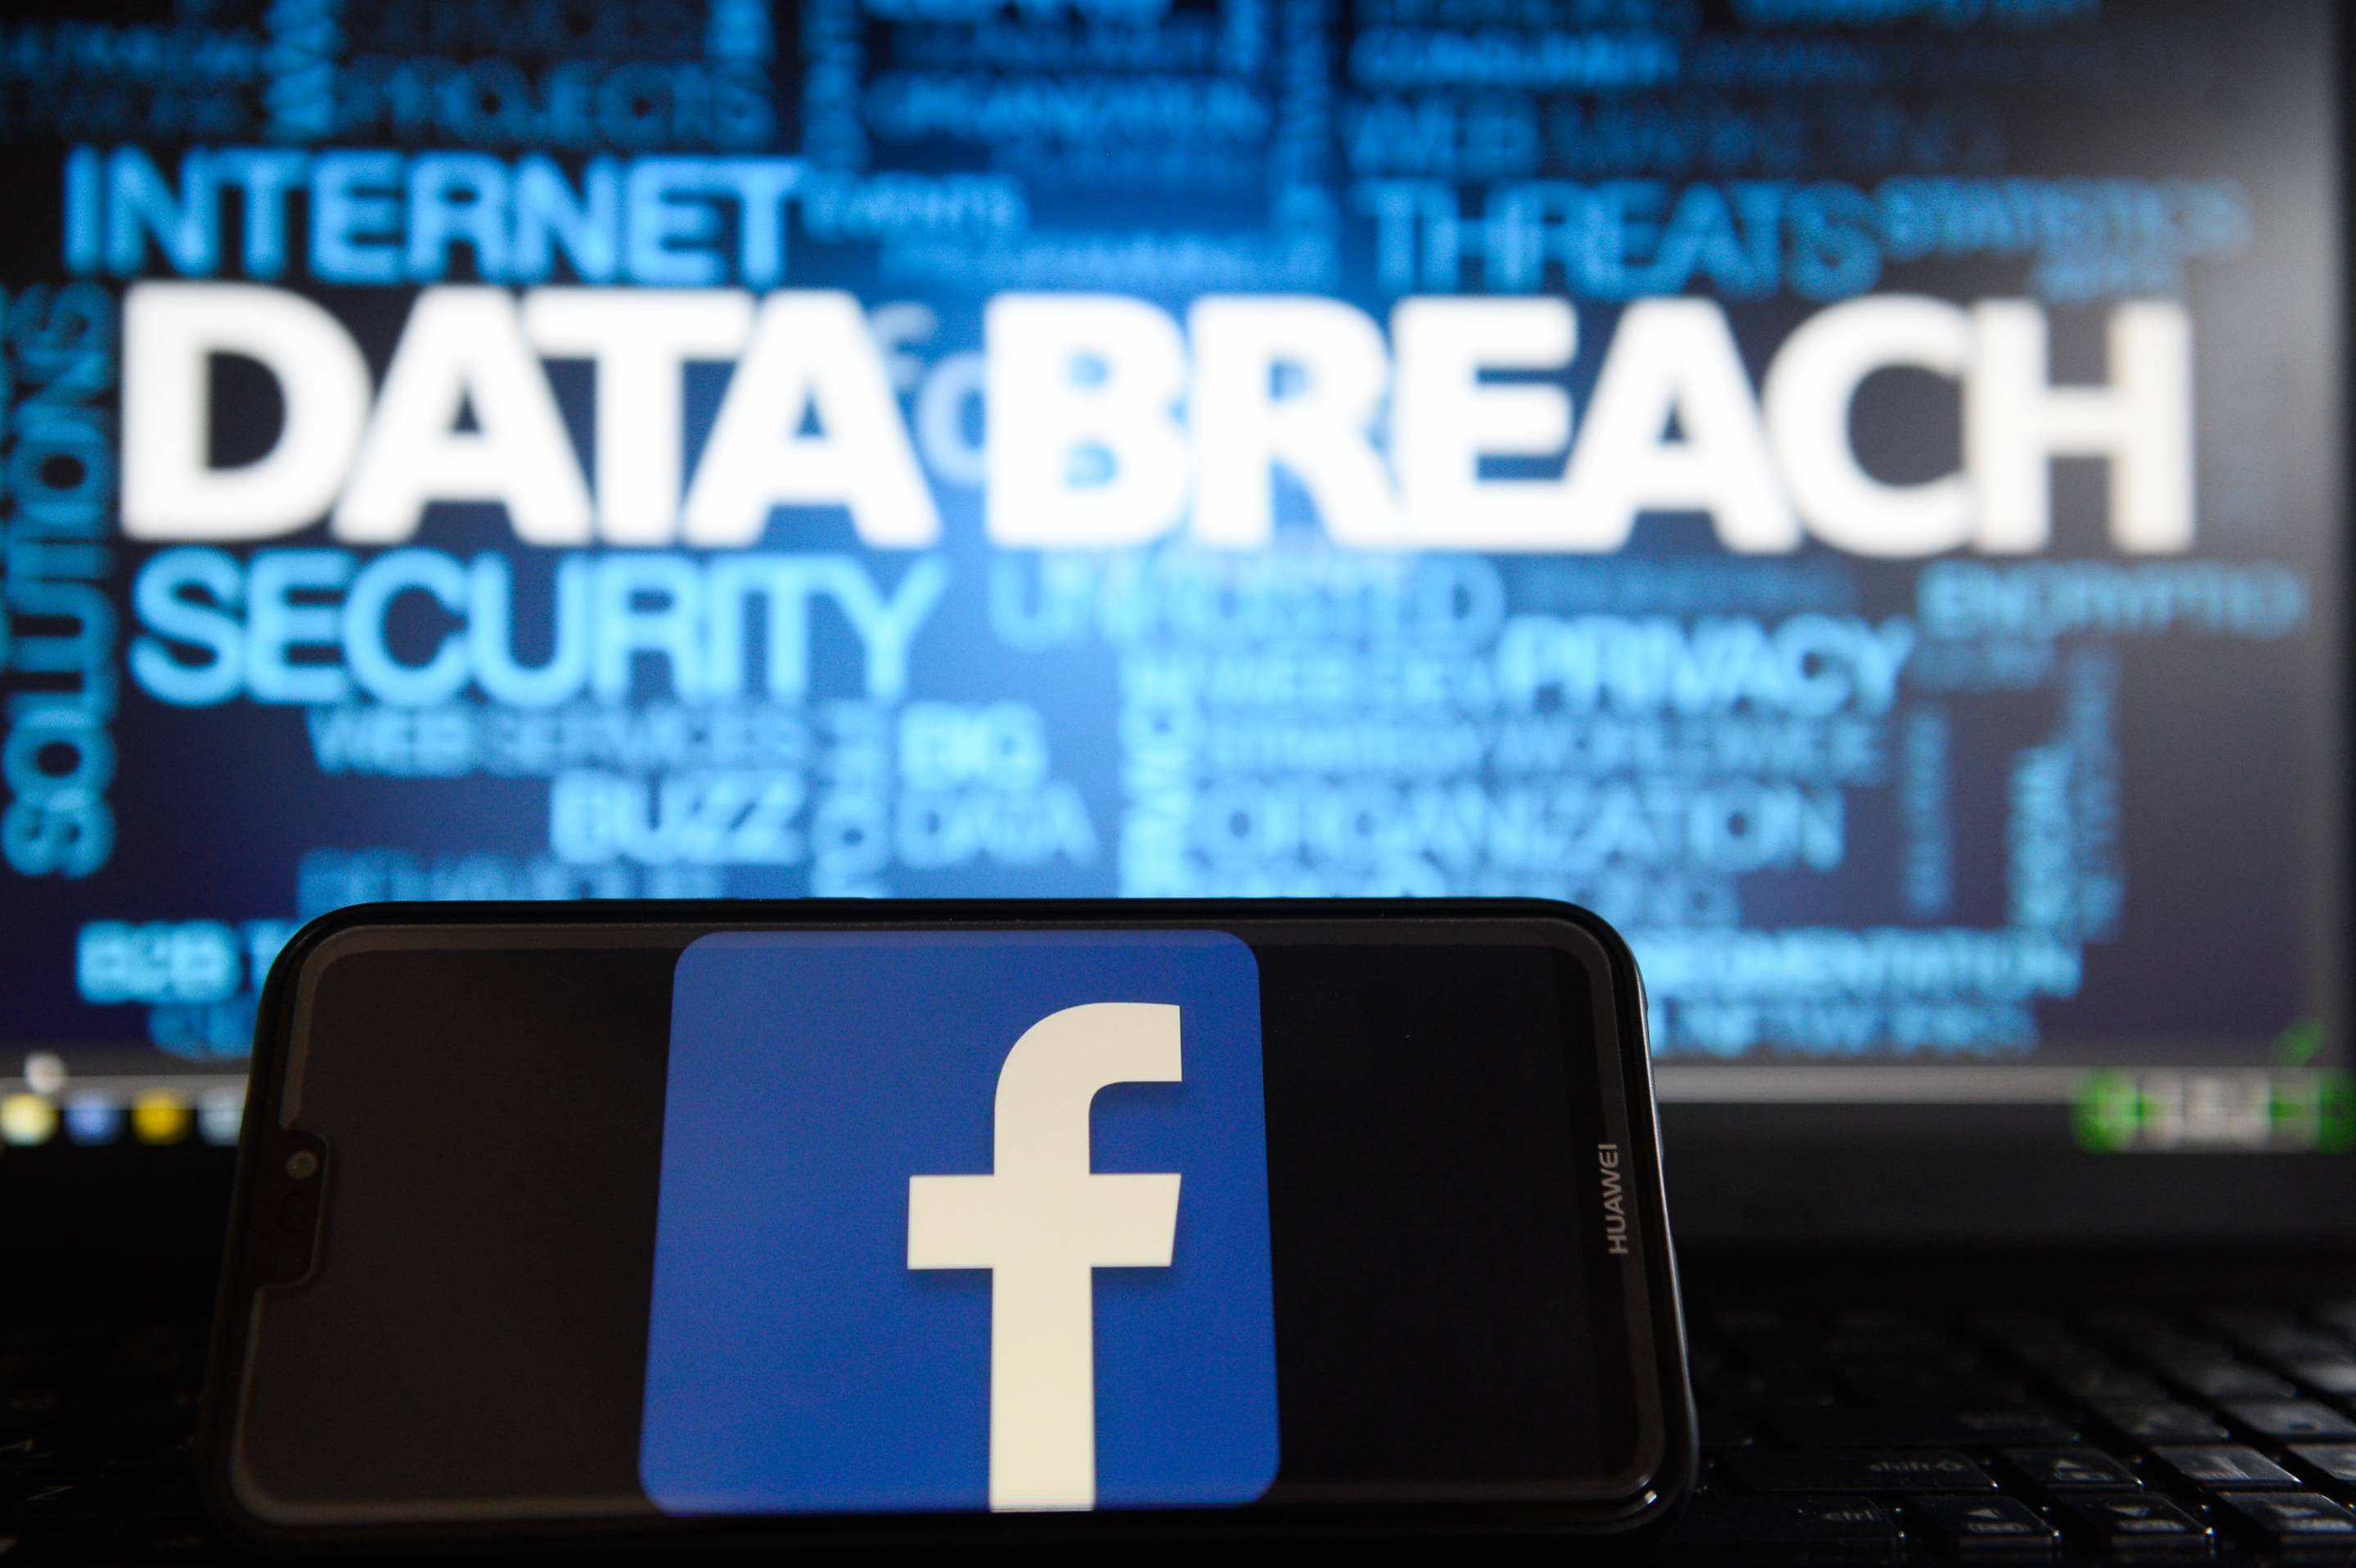 facebook privacy breach case study